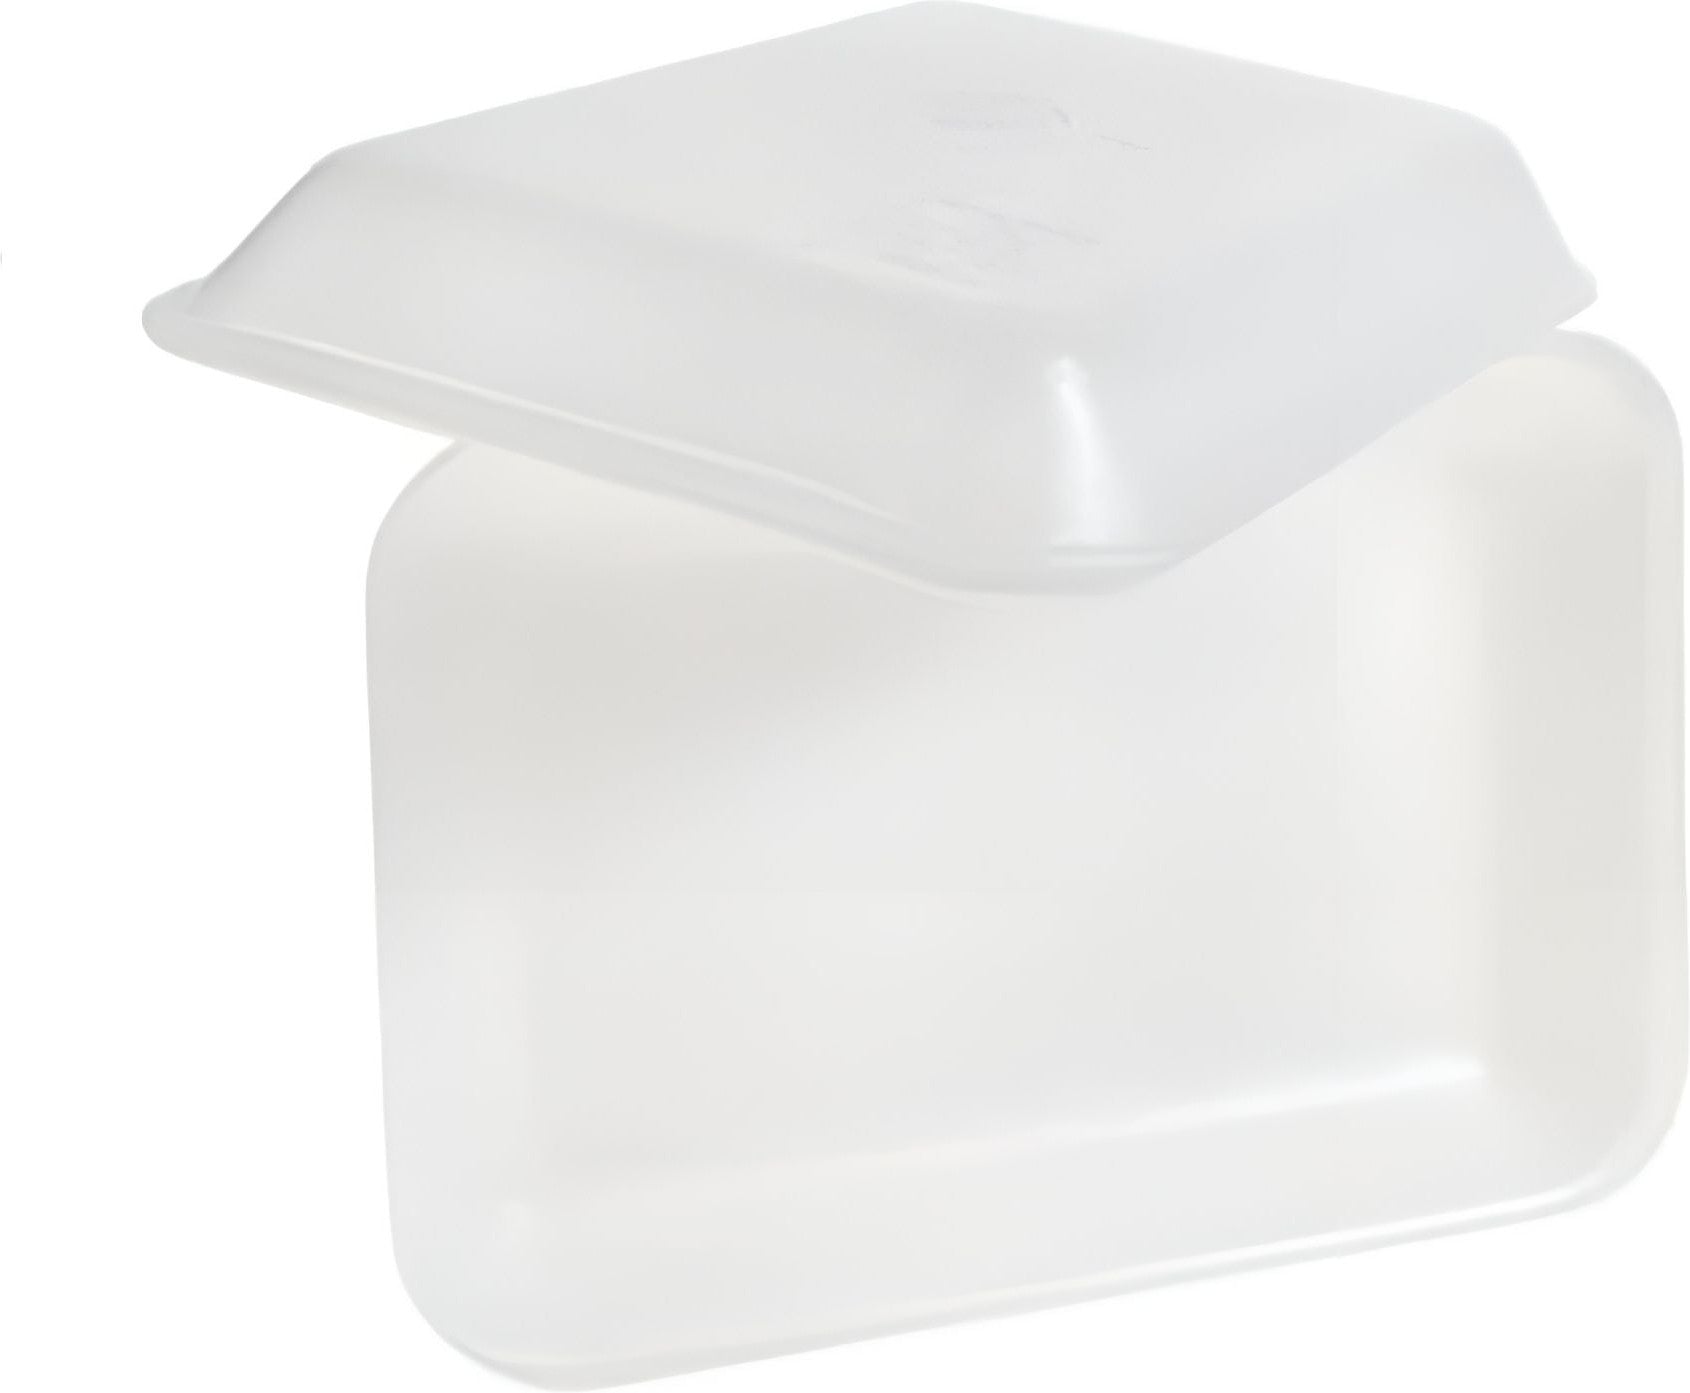 Dyne-A-Pak Inc. - 8.25" x 5.75" x 1" 2/2D White Foam Meat Trays, 500 Per Case - 2010020W00